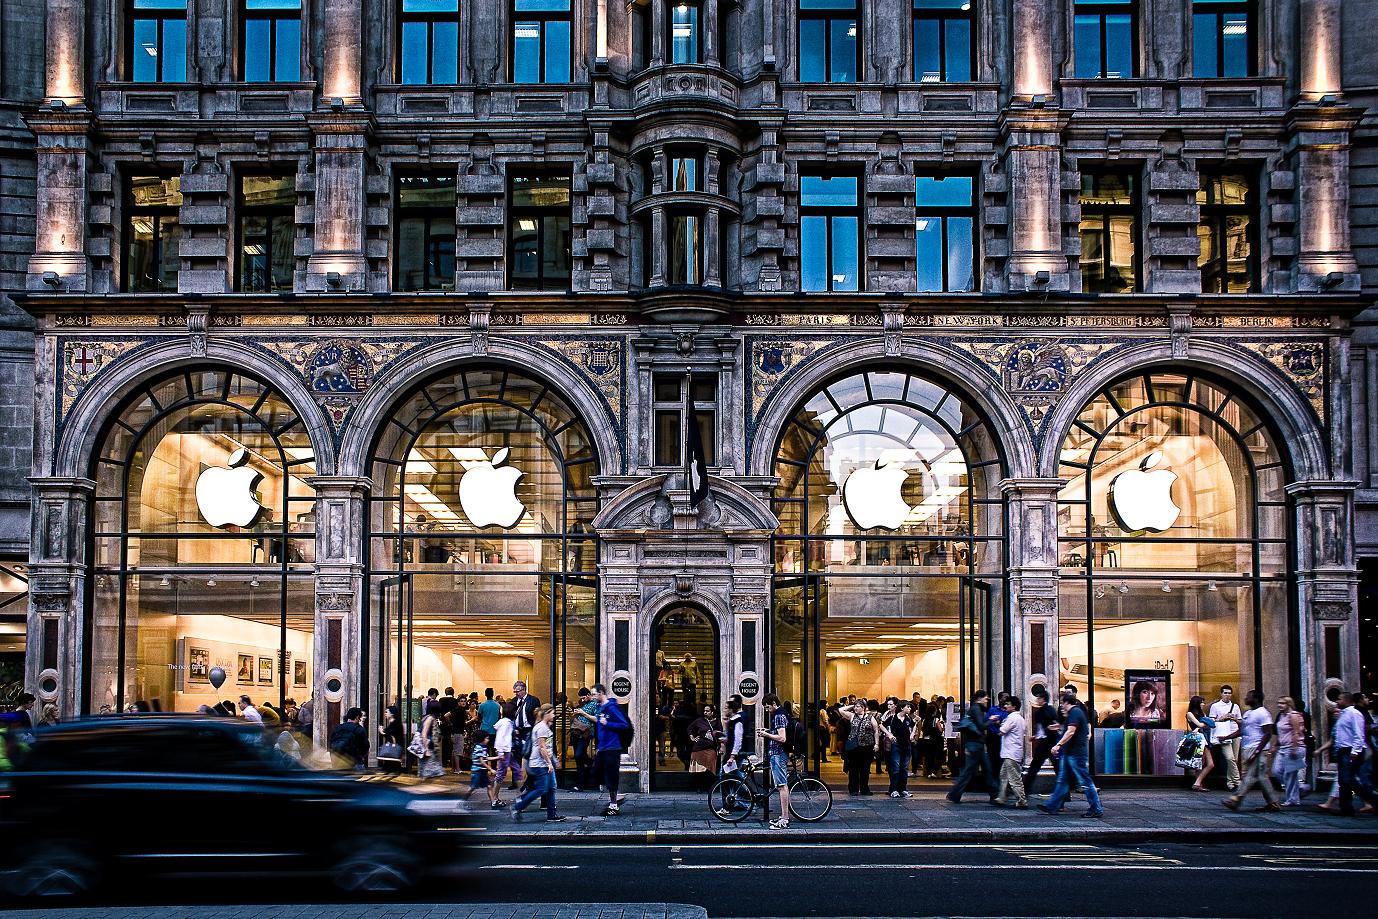 Apple Store London